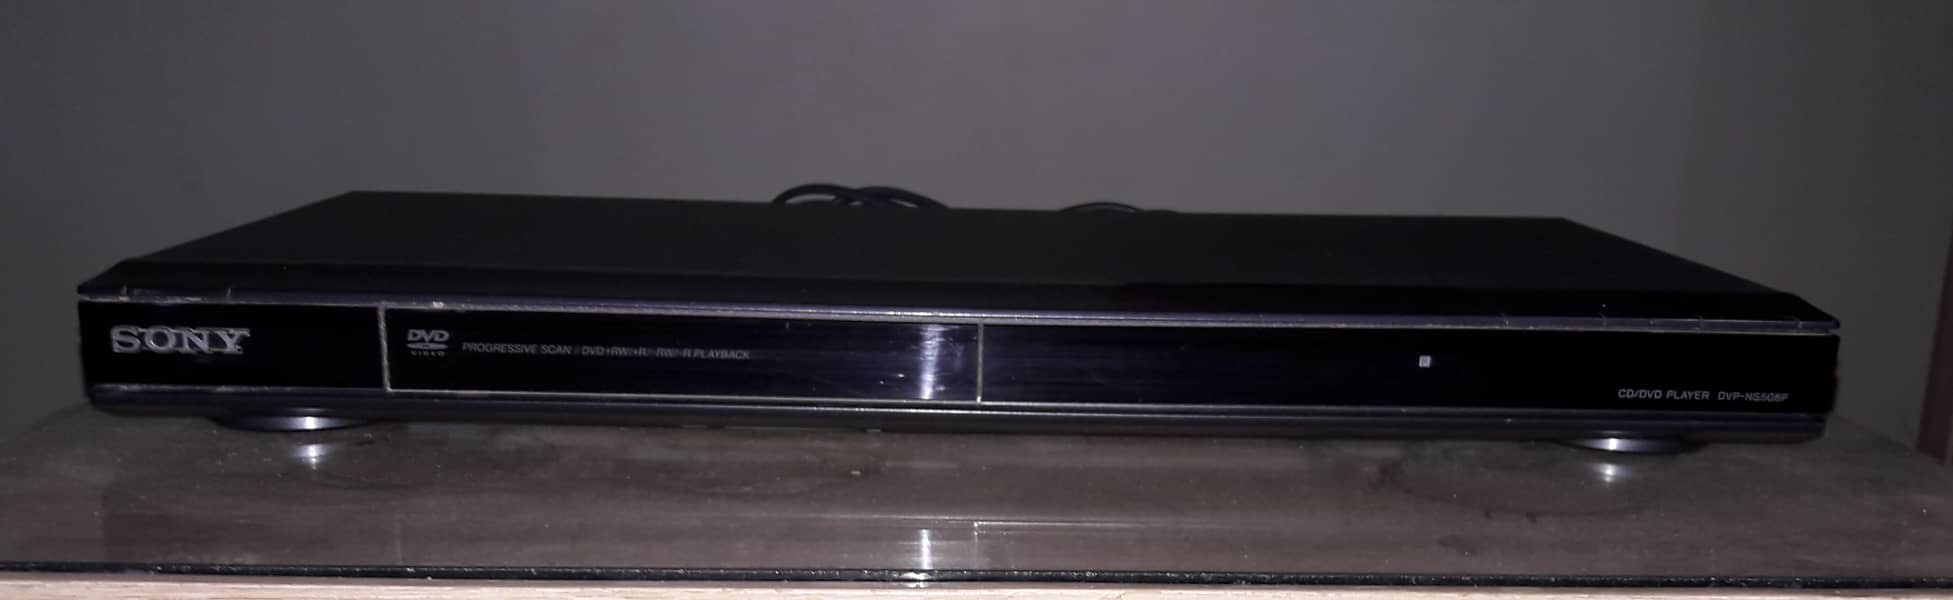 SONY CD/DVD Player DVP-NS508P 0